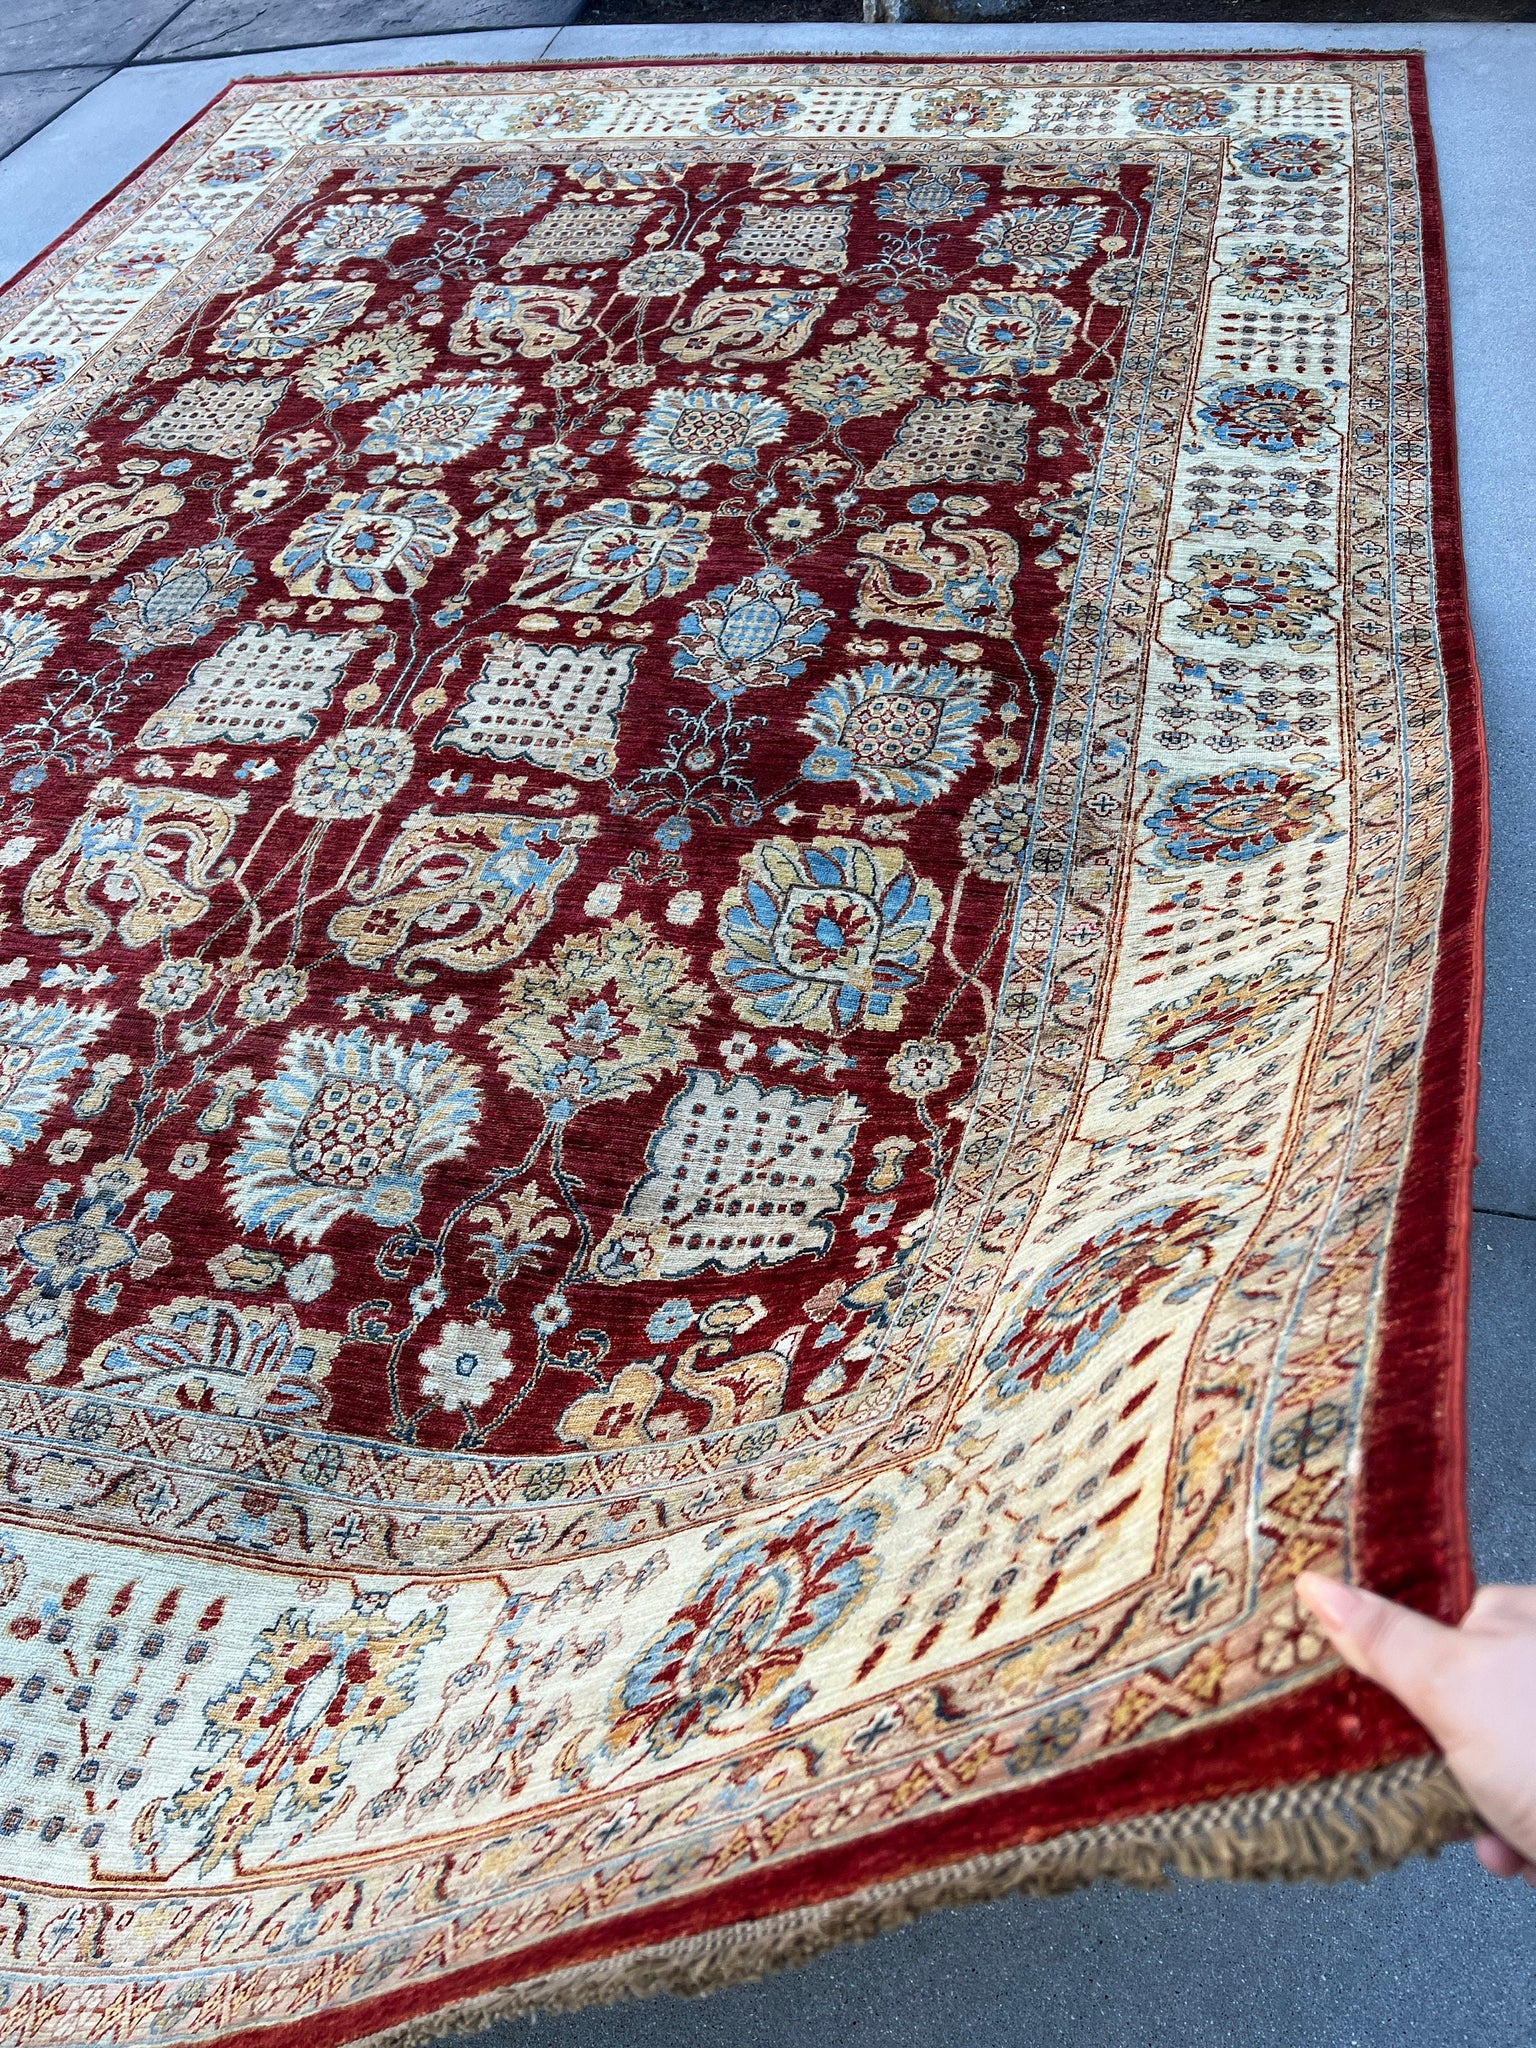 9x13 (275x395) Fair Trade Handmade Afghan Rug | Crimson Red Beige Cream Blue Ivory Gold Brown | Turkish Persian Hand Knotted Oriental Wool